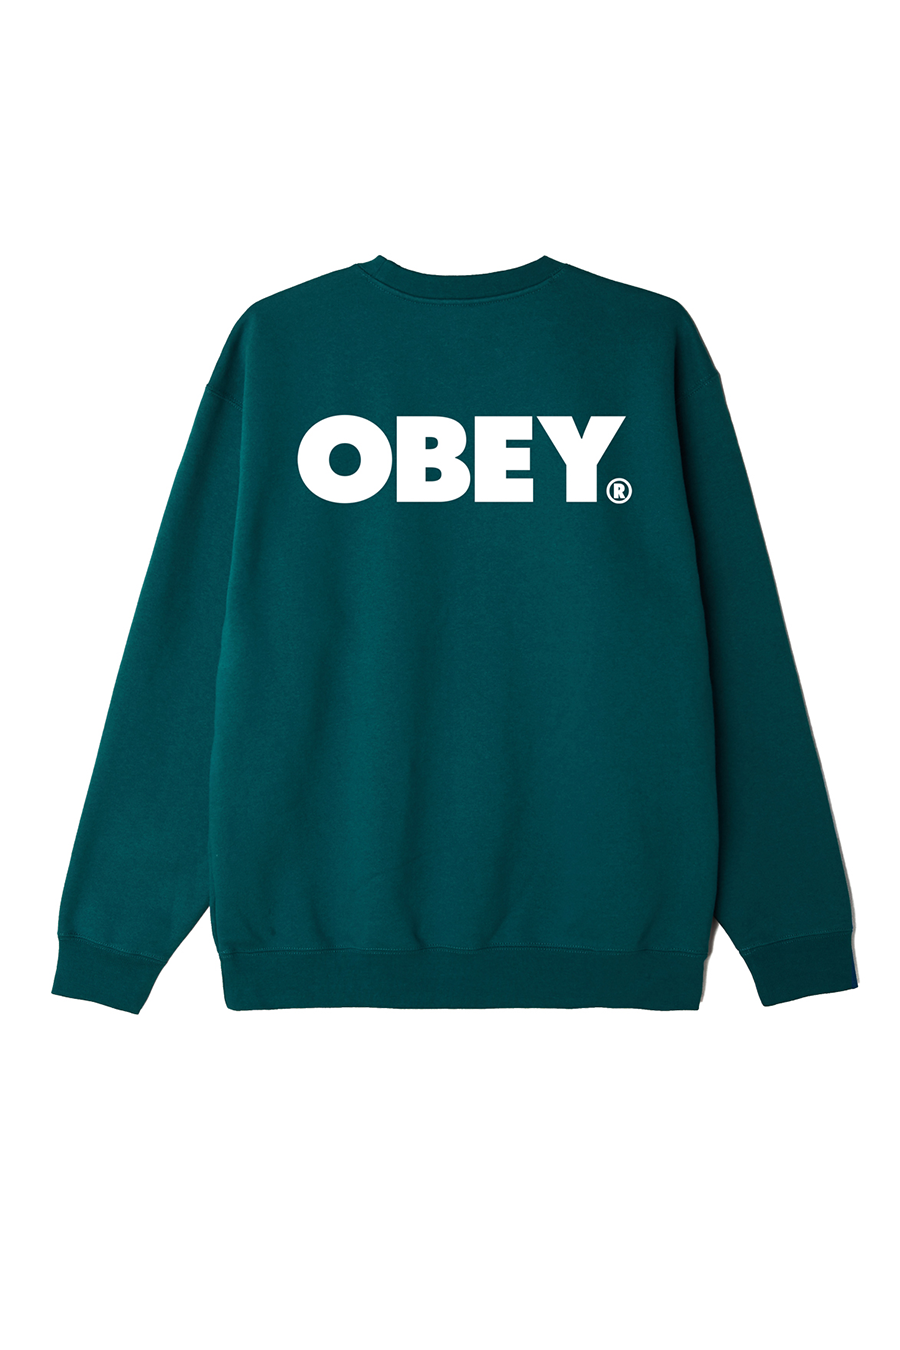 Obey Bold Sweatshirt | Mallard Green - Main Image Number 2 of 2